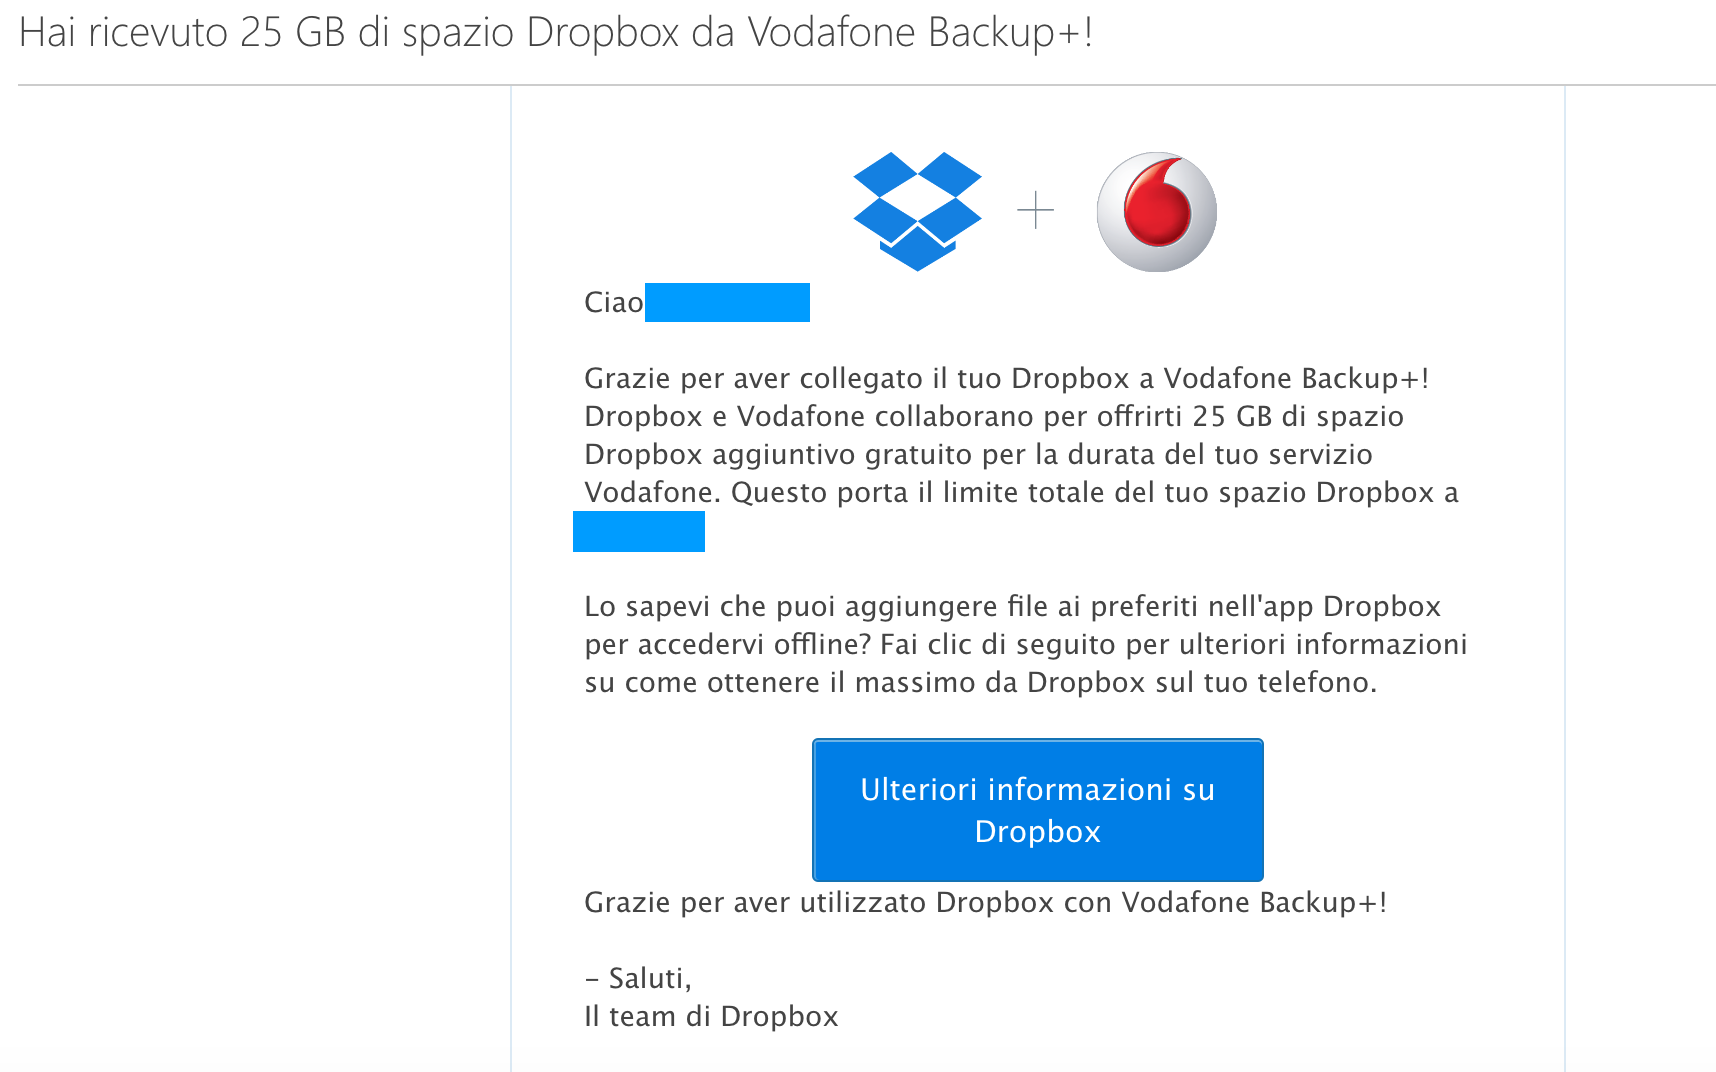 vodafone backup+ dropbox